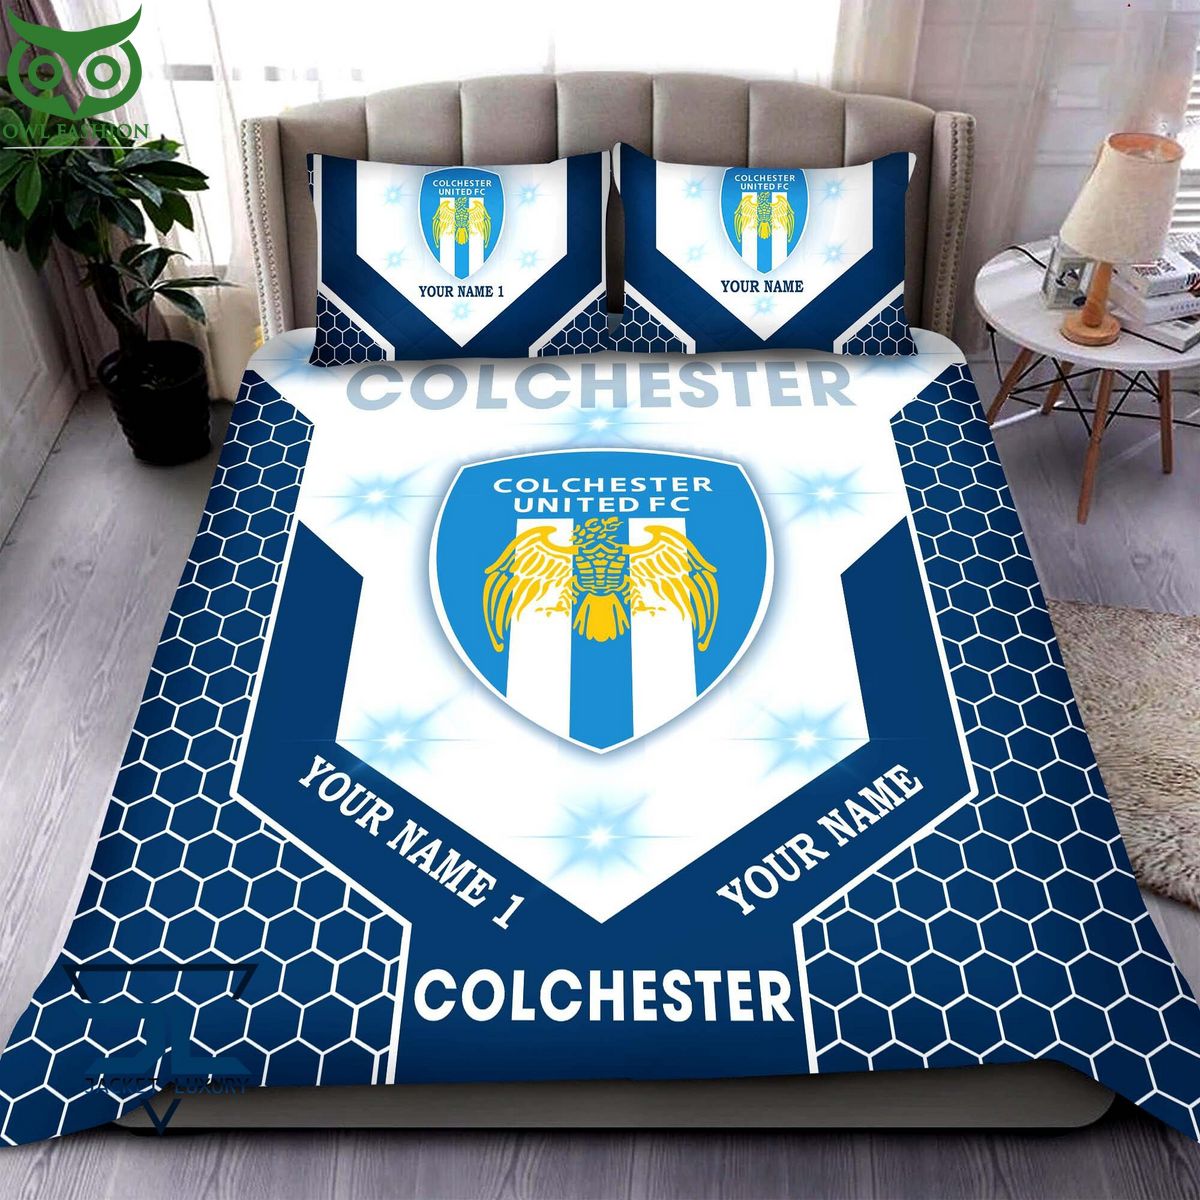 colchester united personalized efl bedding set 1 ZaJzE.jpg